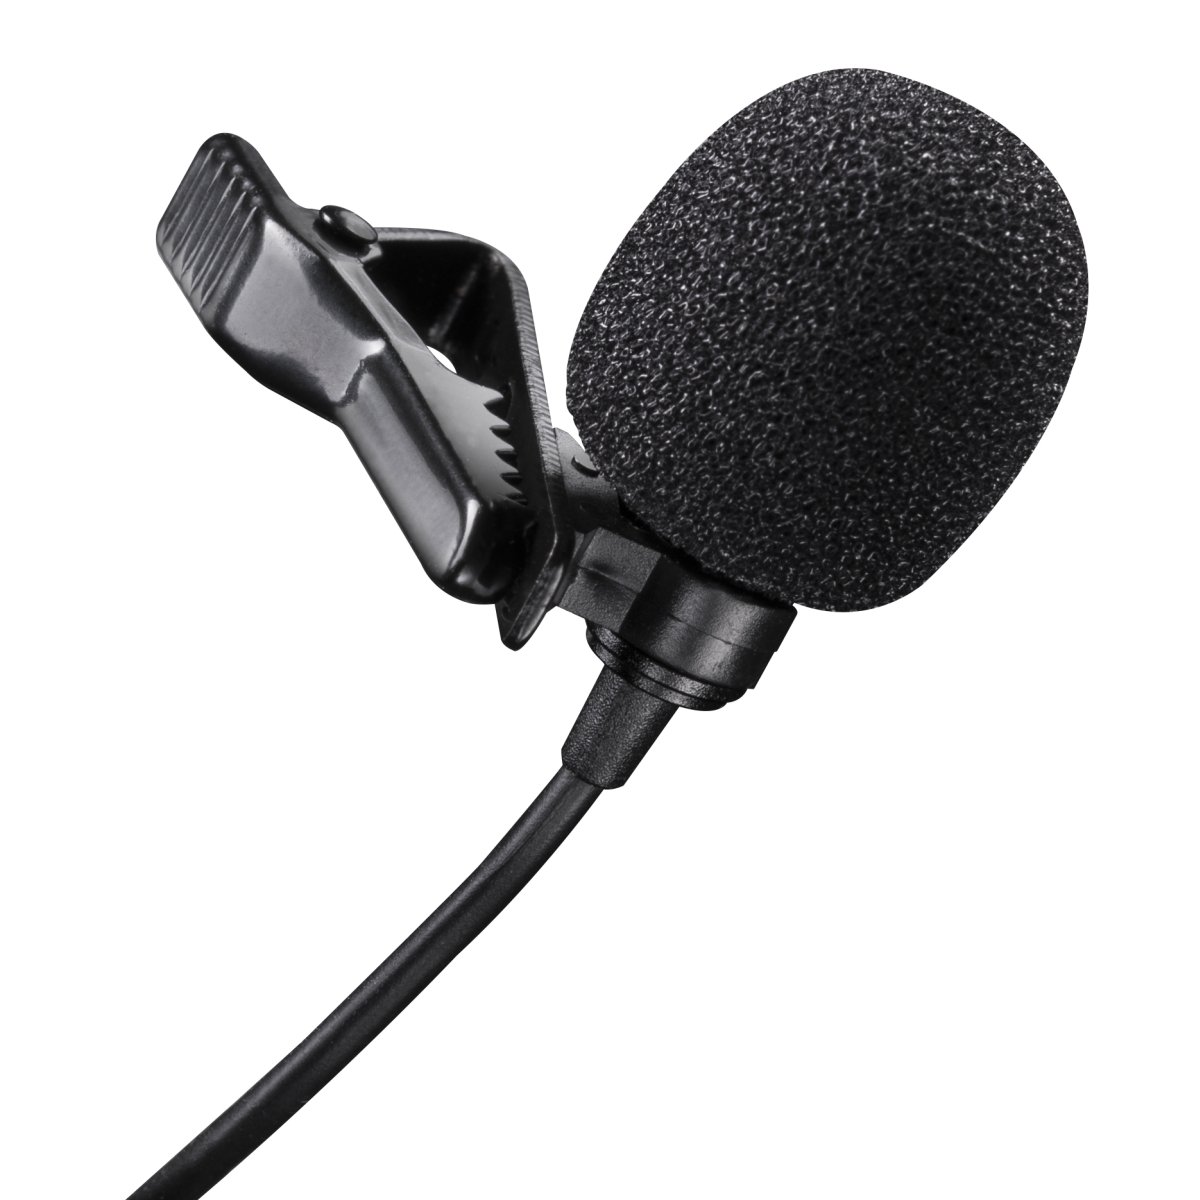 Walimex Pro Lavalier Mikrofon (Ansteckmikrofon Länge 120 cm, inkl. Clip) für Smartphones